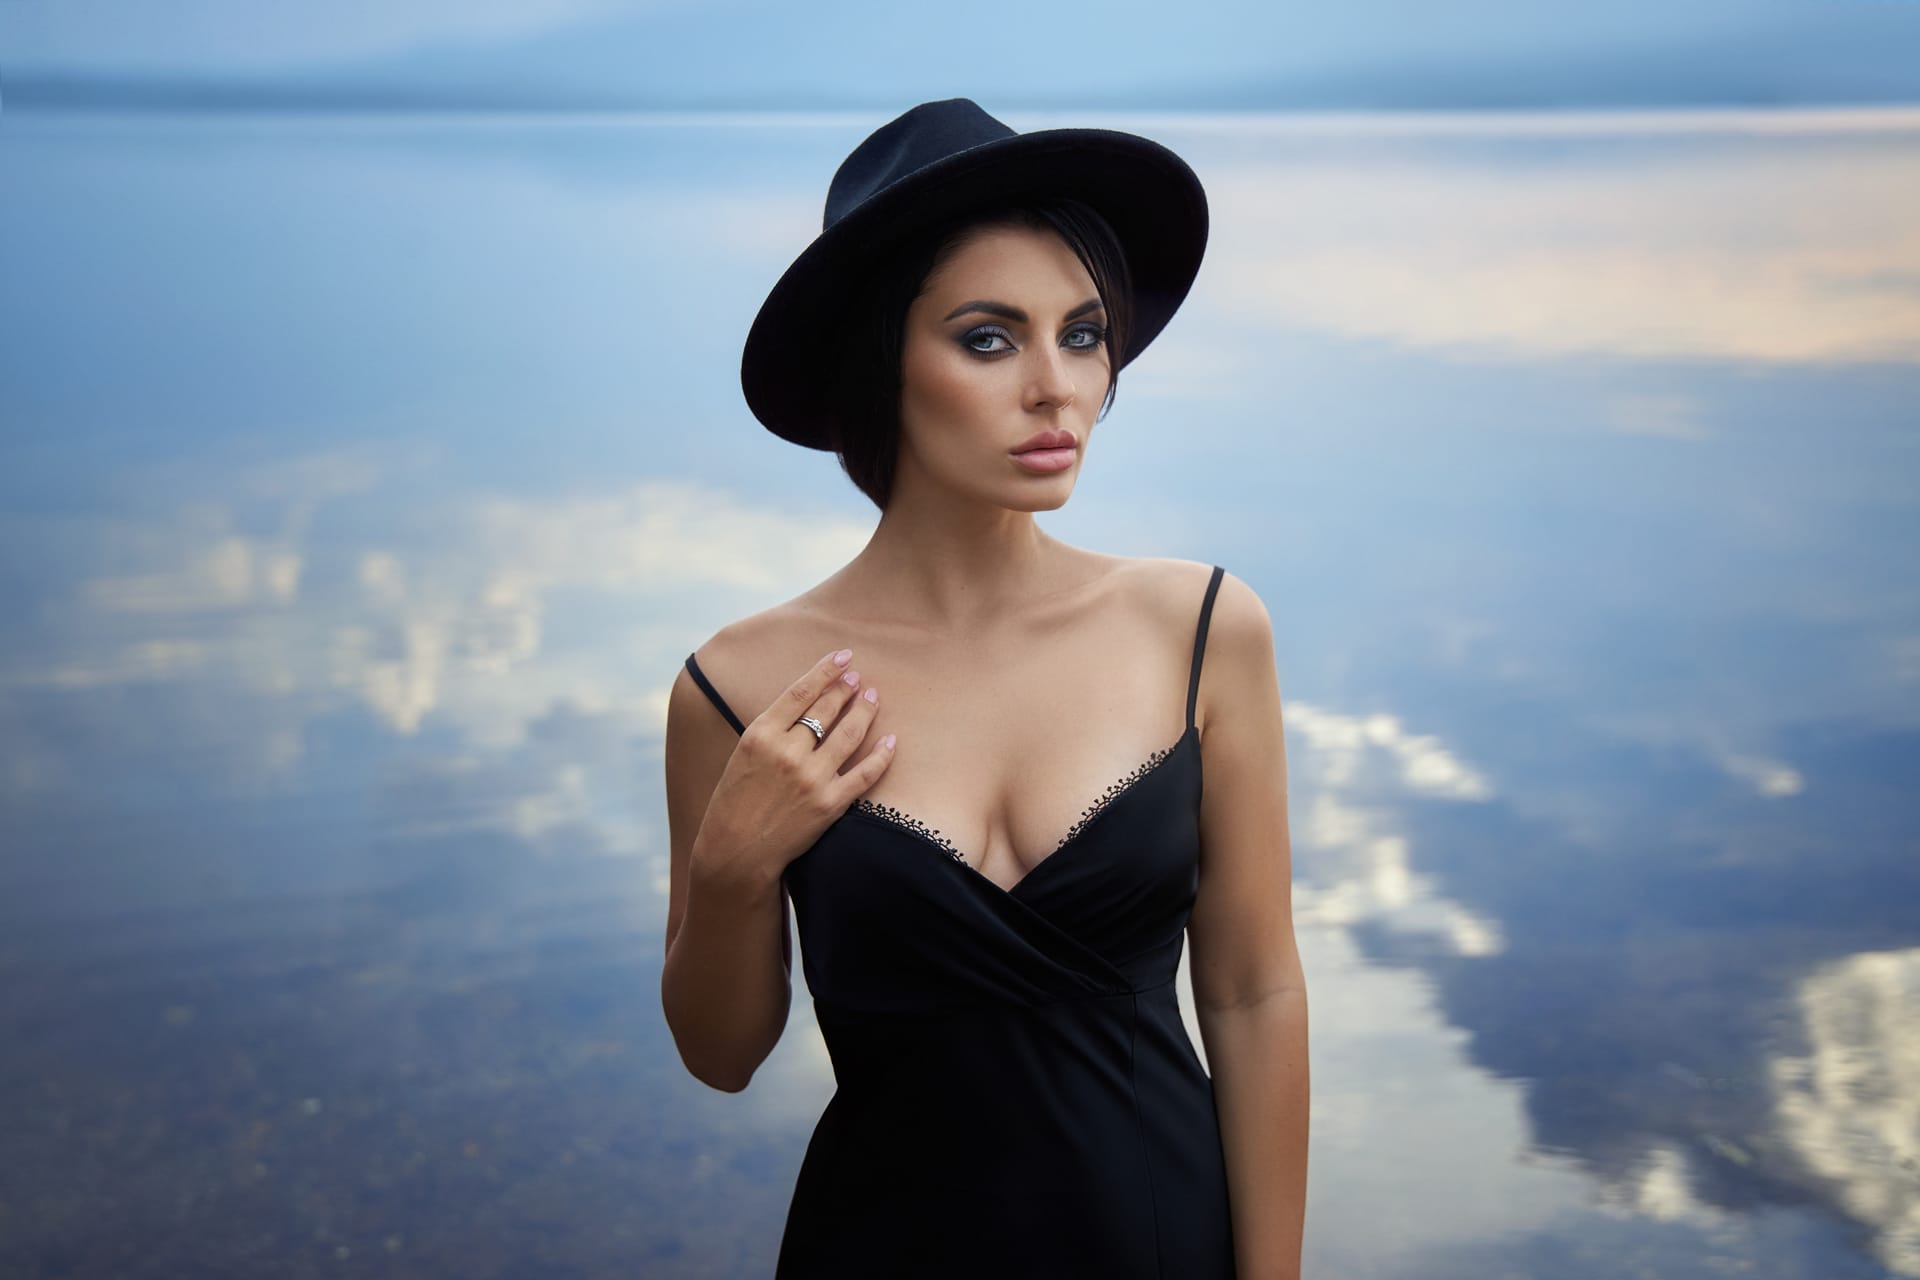 Beauty woman black hat black dress poses near lake against blue sky image